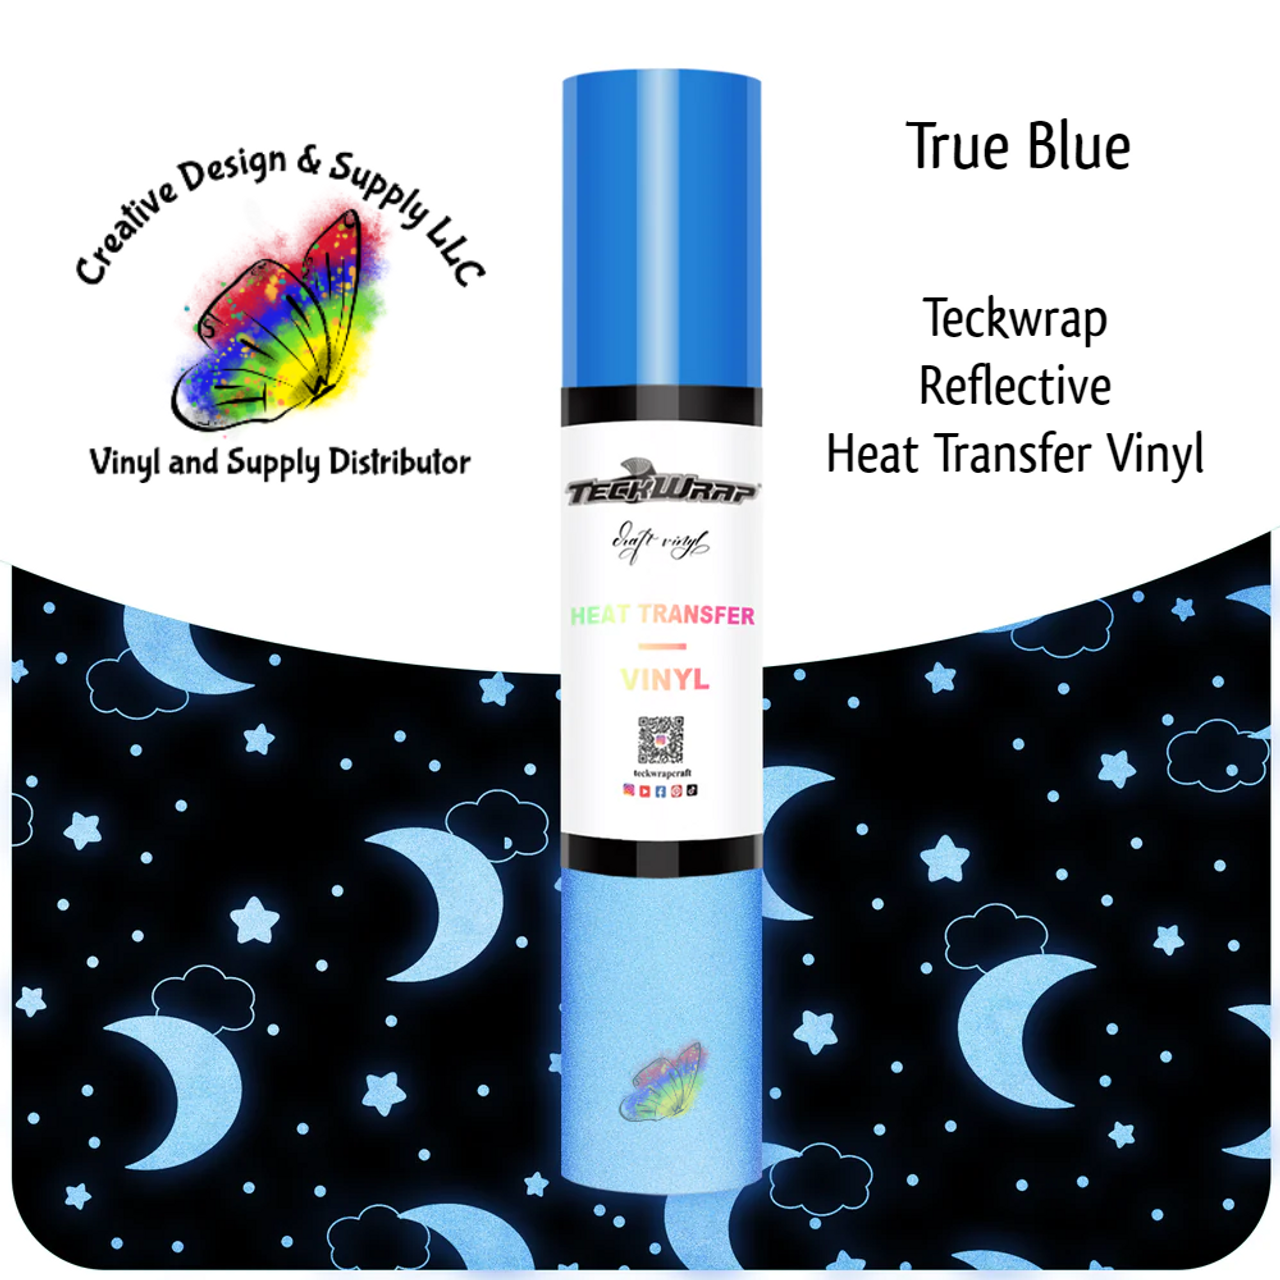 Teckwrap Reflective HTV | True Blue